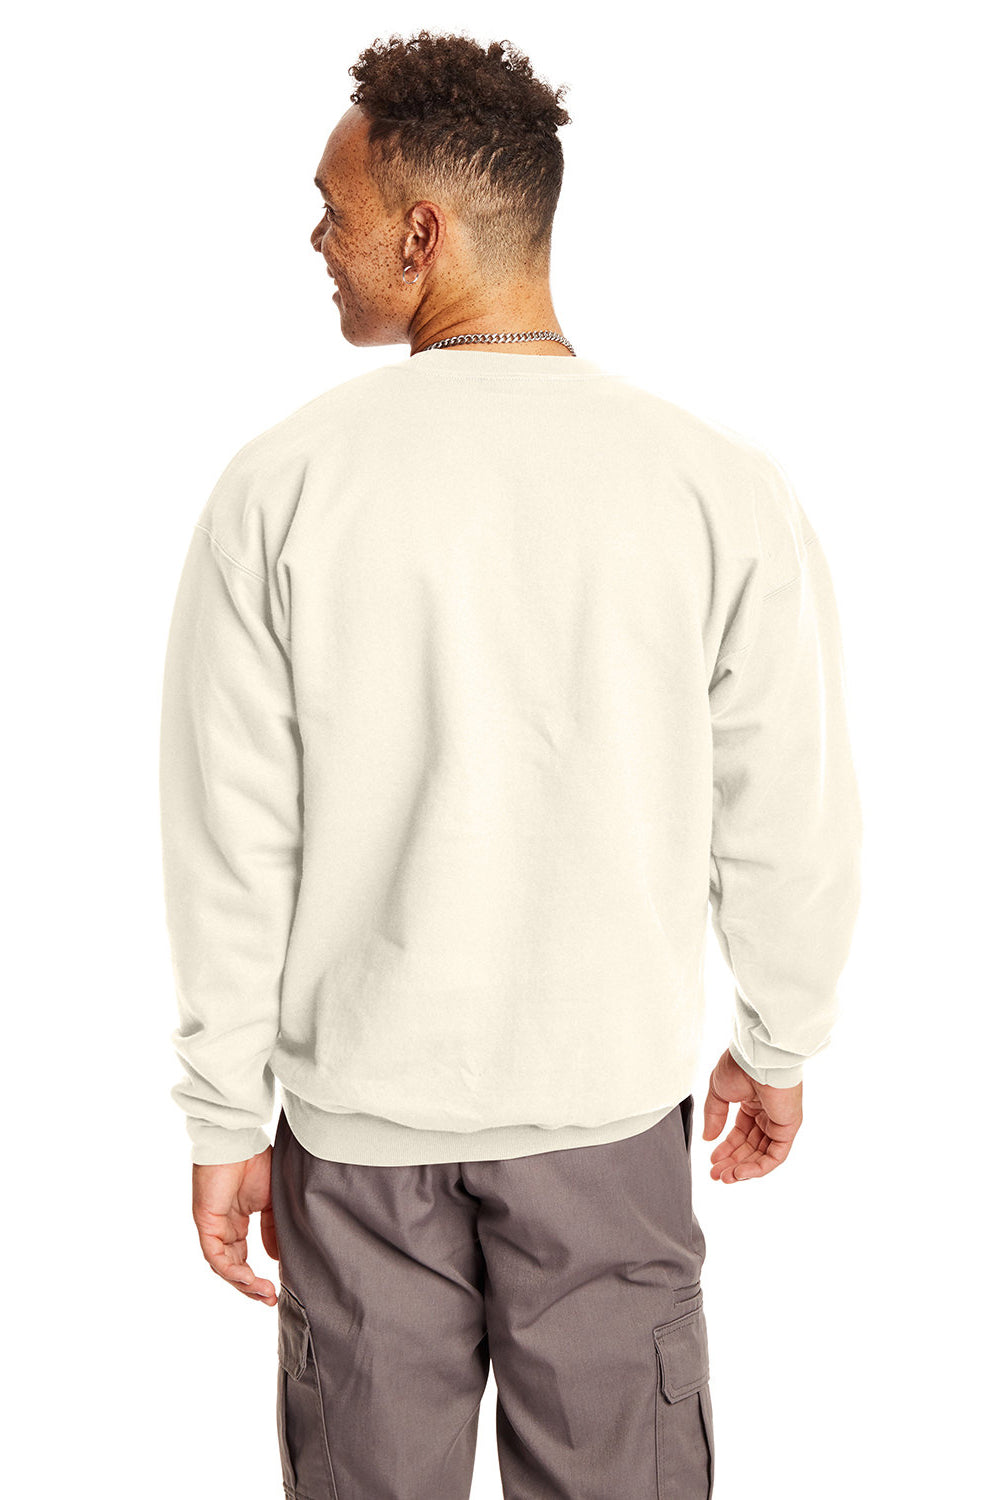 Hanes F260 Mens Ultimate Cotton PrintPro XP Crewneck Sweatshirt Natural Back